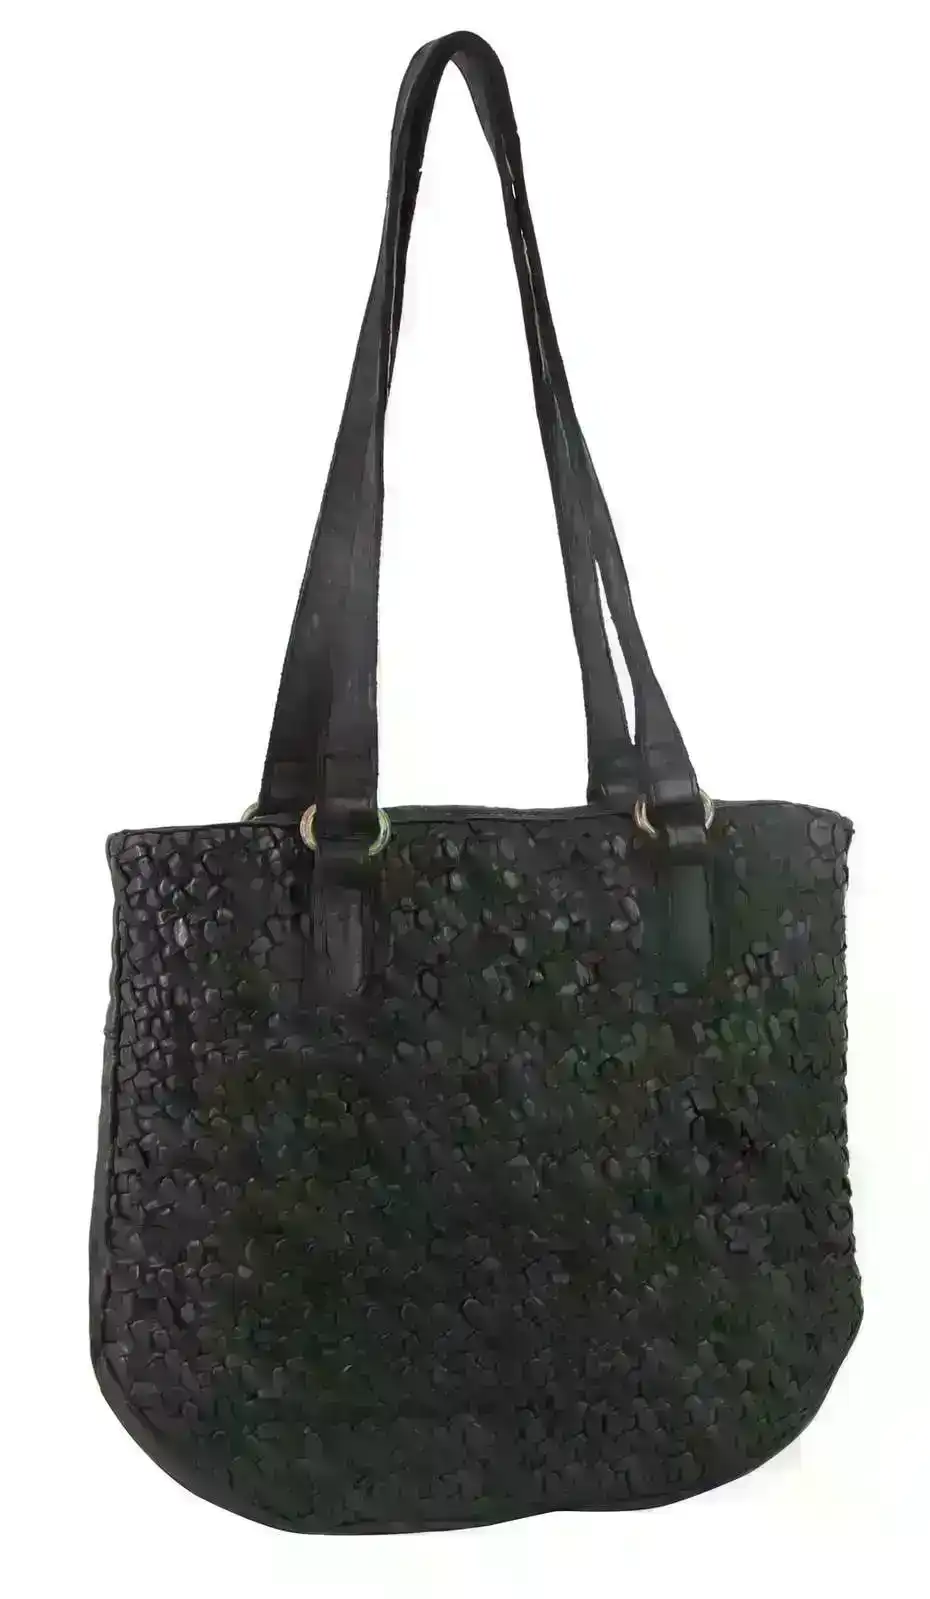 Pierre Cardin Woven Leather Ladies Shoulder Bag - Black